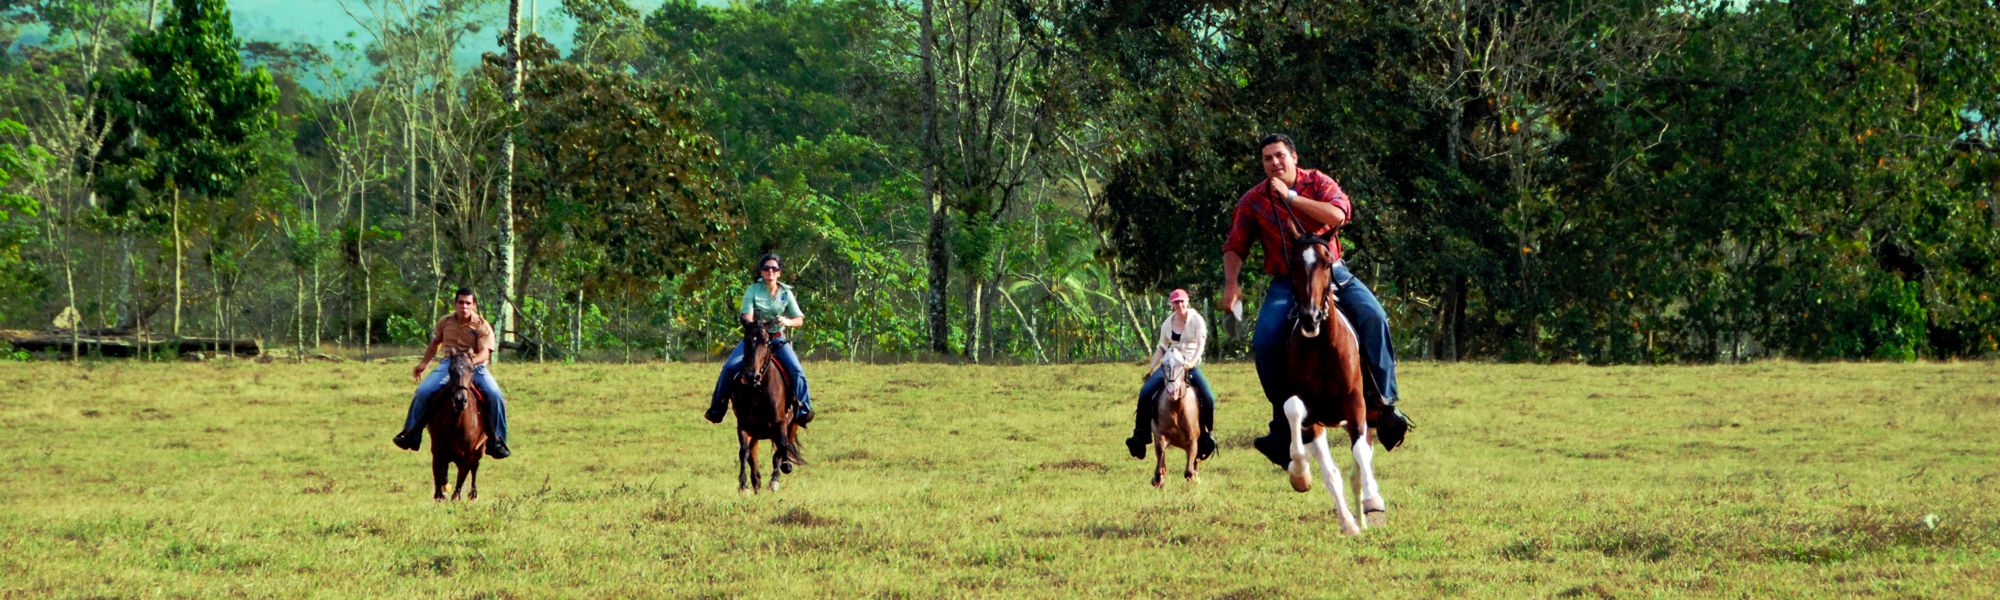 Serendipity horses running in open pasture, Costa Rica